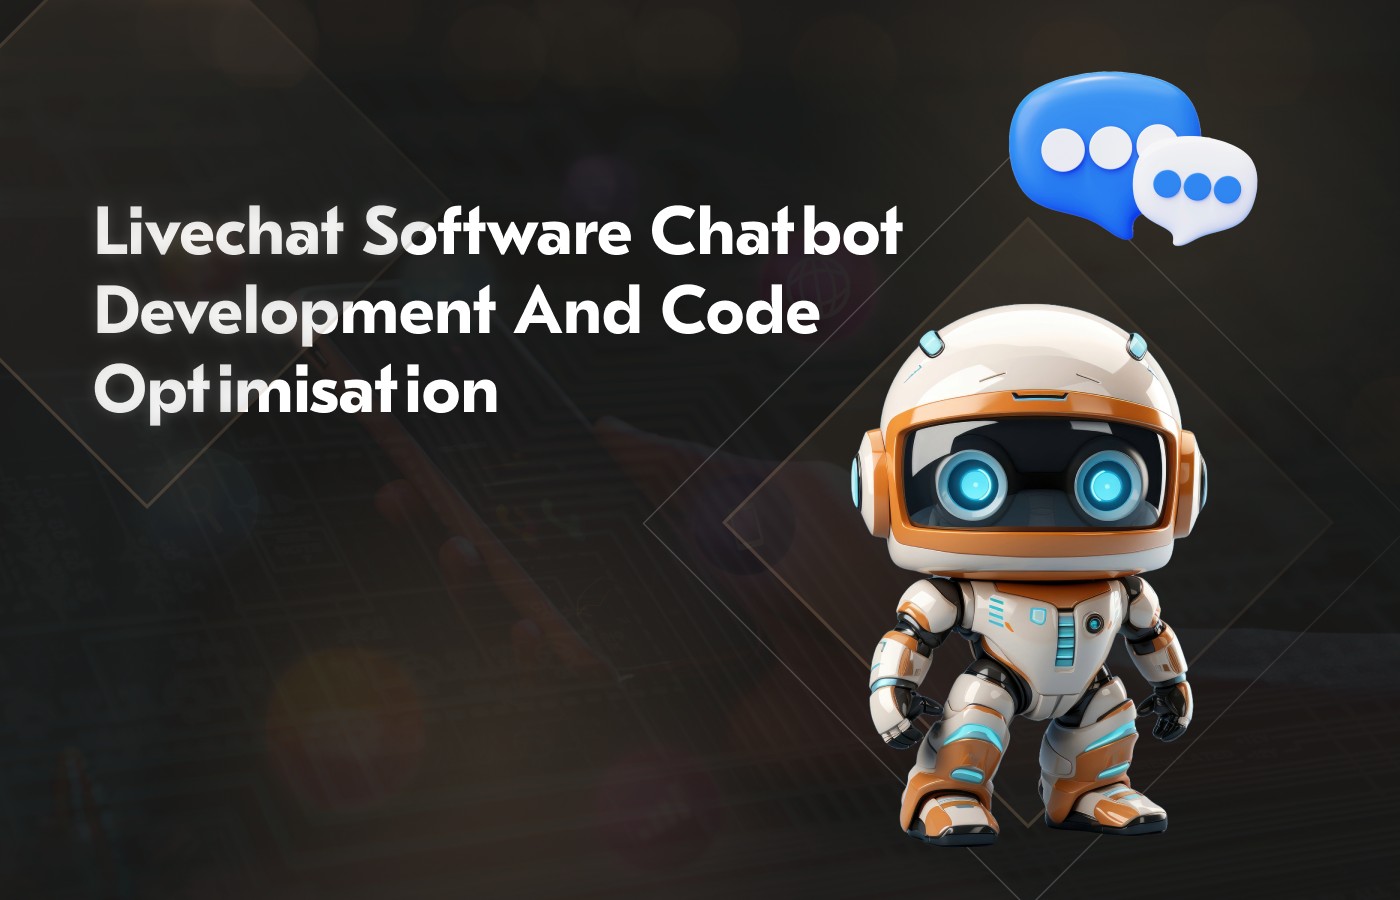 Livechat Software Chatbot Development and Code Optimisation